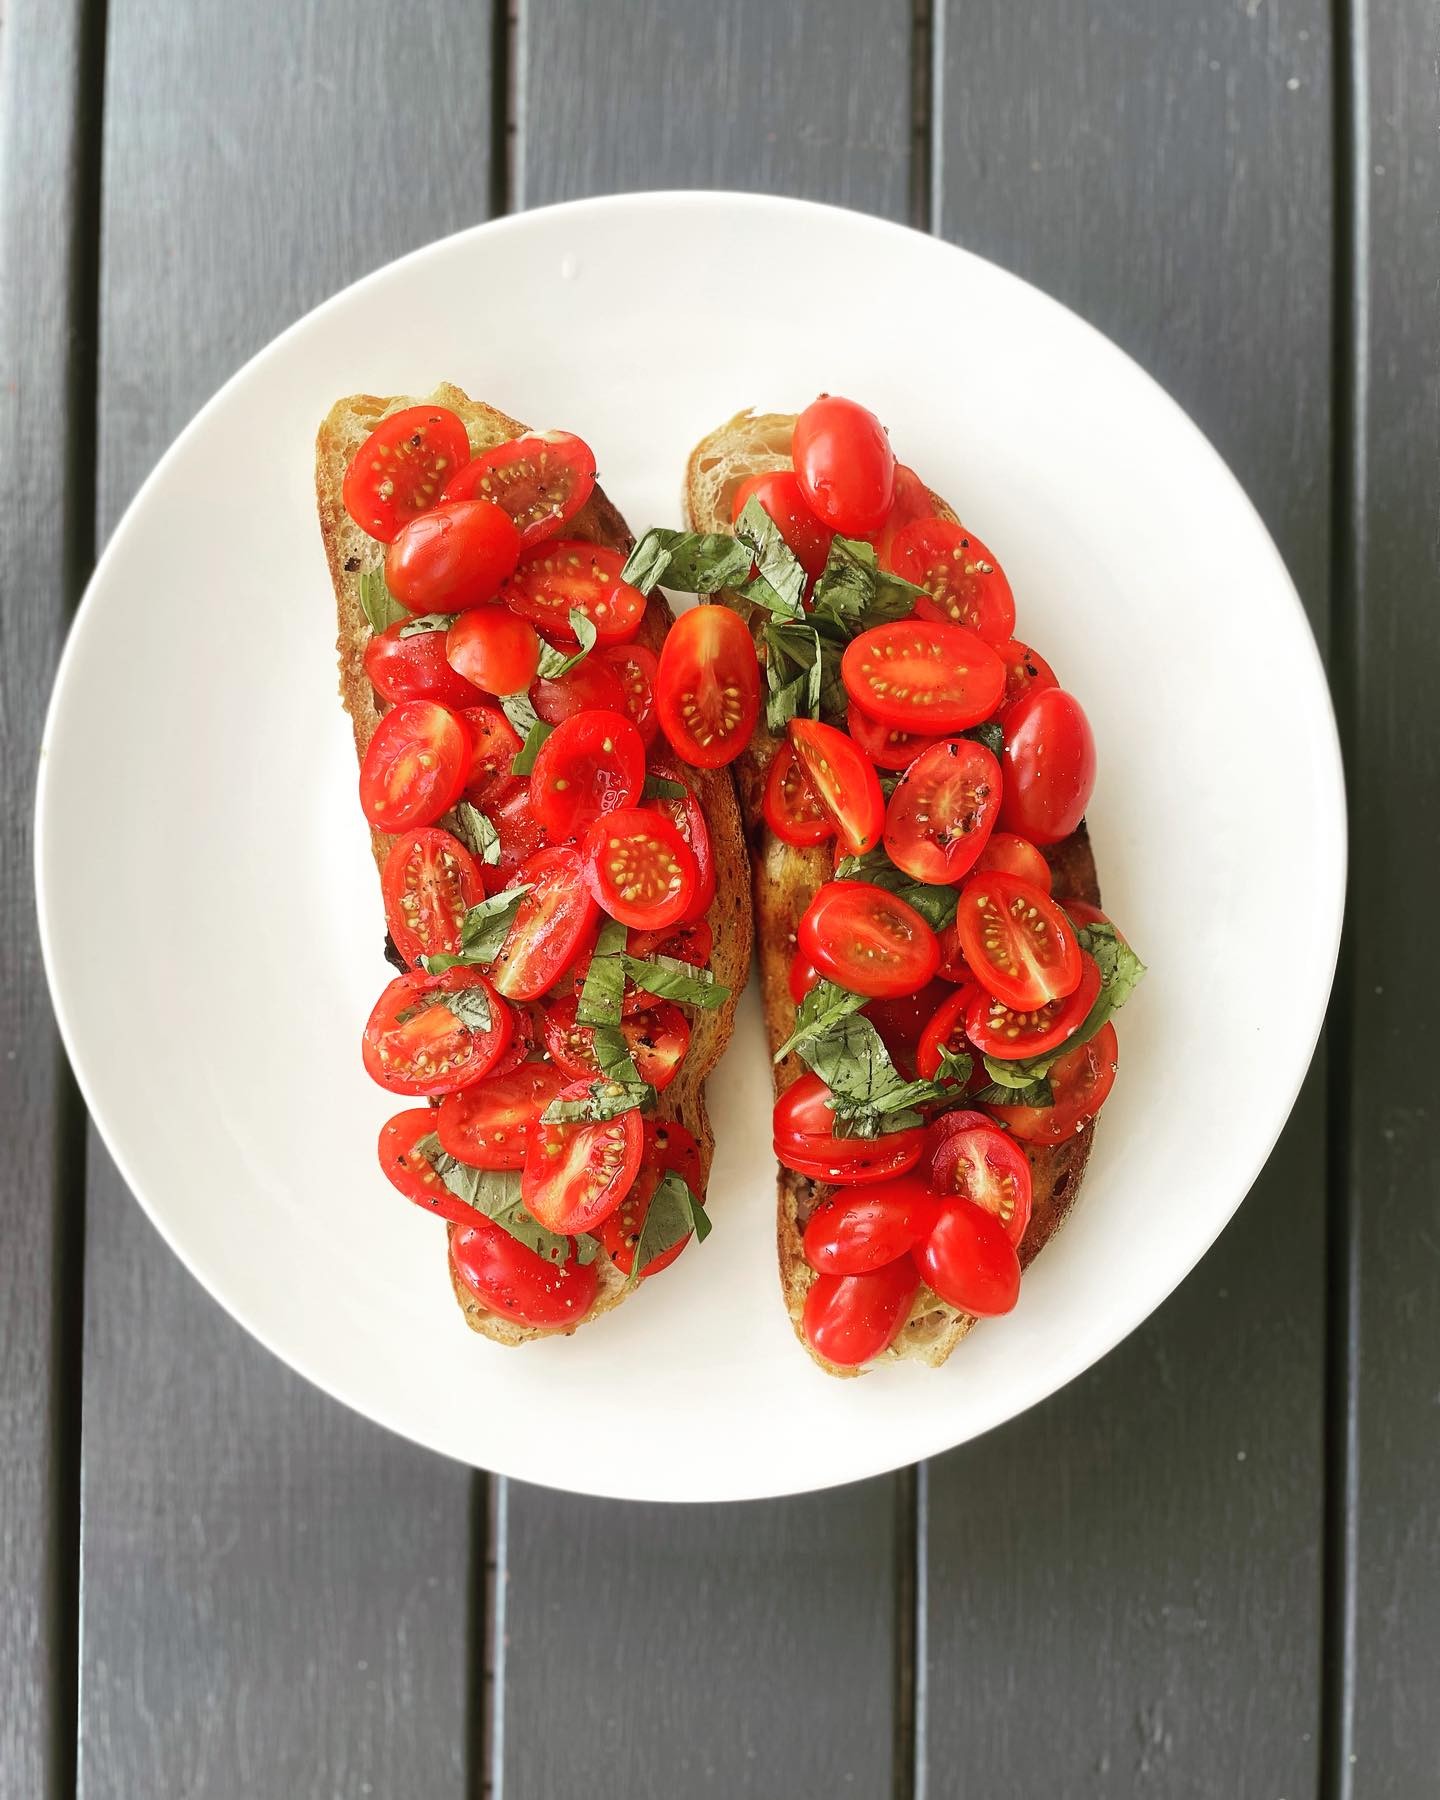 Lazy days with @wildwheatnz sourdough and @beekistnz cherry tomatoes 🍅- homegrown basil 🌿 
.
.
.
.
.
.

#tomato #tomatoes #tomatoesnz #homegrown #vegetables #foodinstagram #thetomatosourcenz #nztomatoes #healthyfood #nz #newzealand #veggies #fruits #5adaynz #vegetablesnz #instagramfood #eatlocal #eatfresh #buylocal #eatwell #5aday